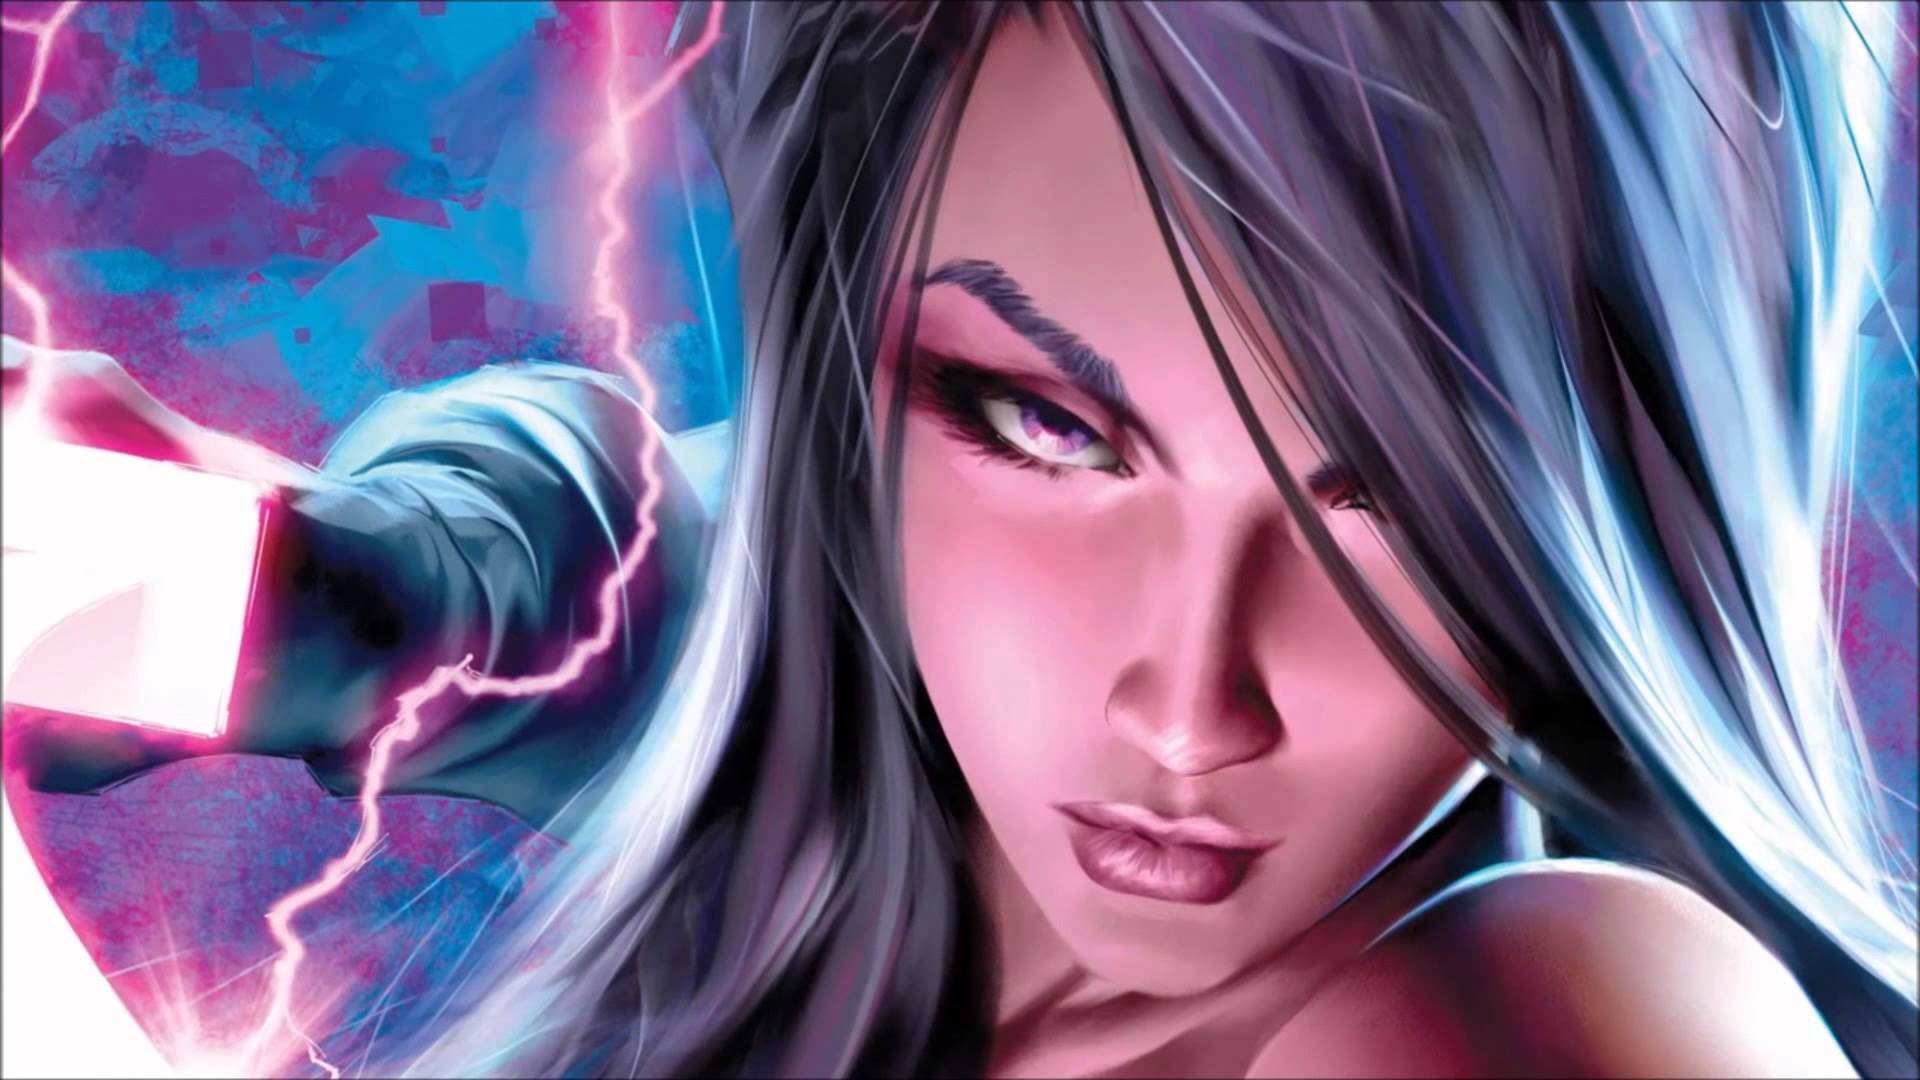 General 1920x1080 Psylocke fantasy girl fantasy art face dark hair women closeup hair in face X-Men Mutant looking at viewer purple eyes